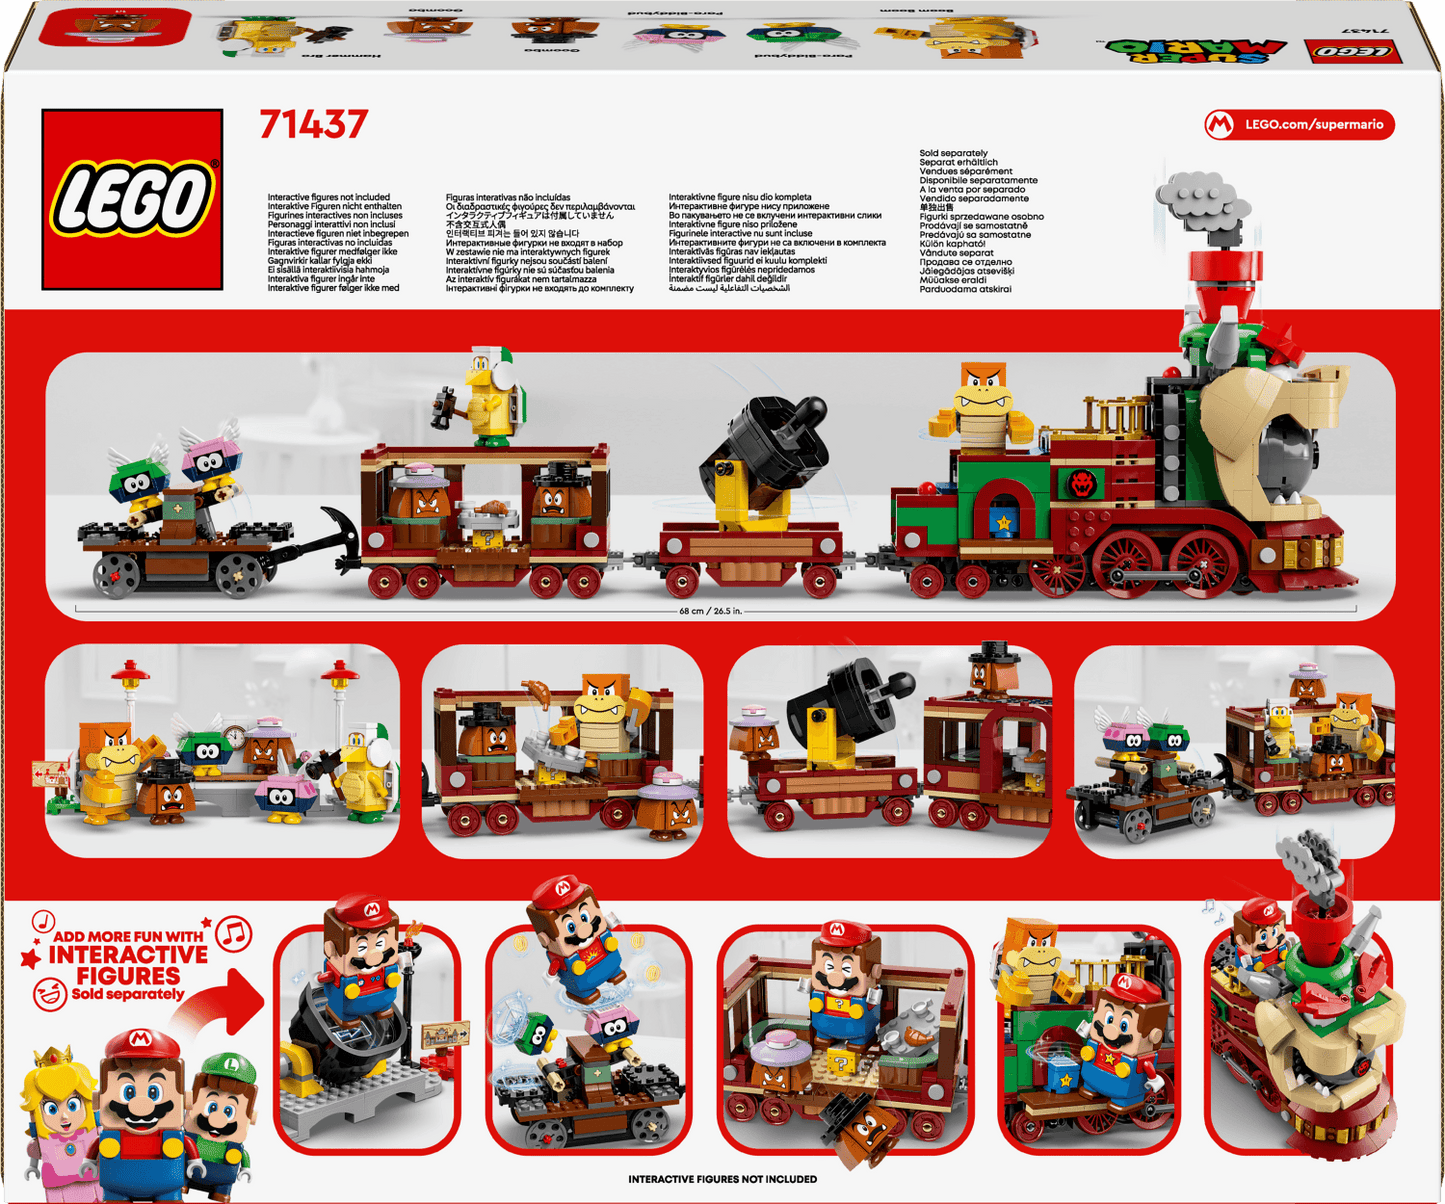 LEGO De Bowser Exprestrein 71437 SuperMario (Pre-Order: verwacht augustus) LEGO SUPERMARIO @ 2TTOYS LEGO €. 101.99